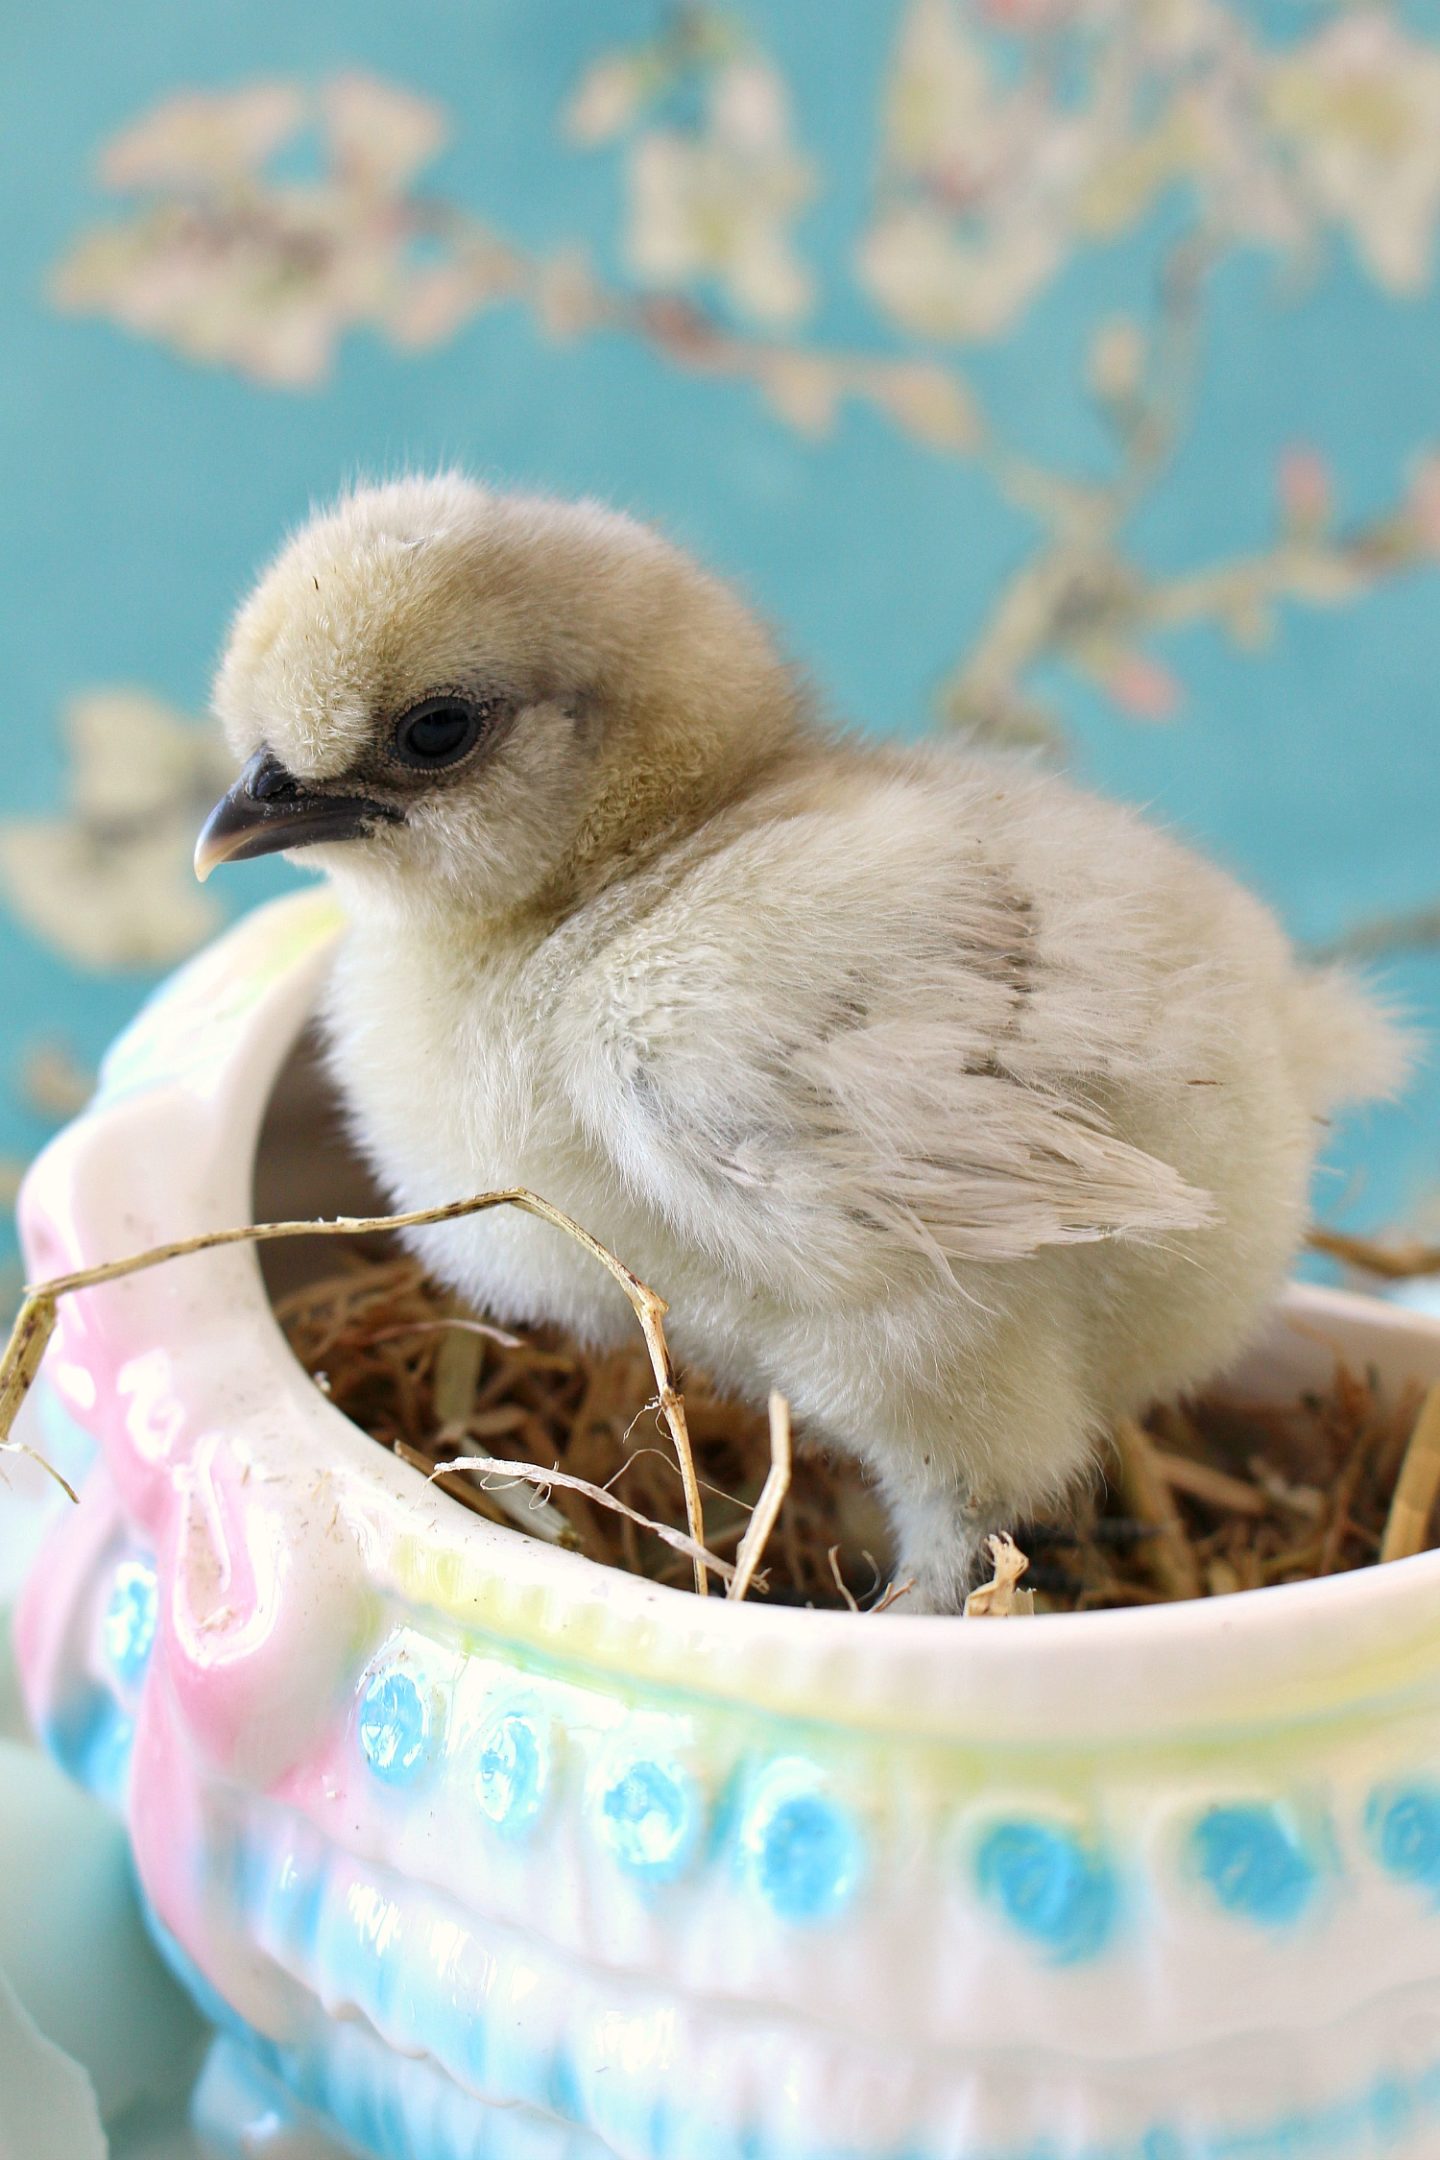 Spring Baby Chick Photos | We Got a New Batch of Chicks!